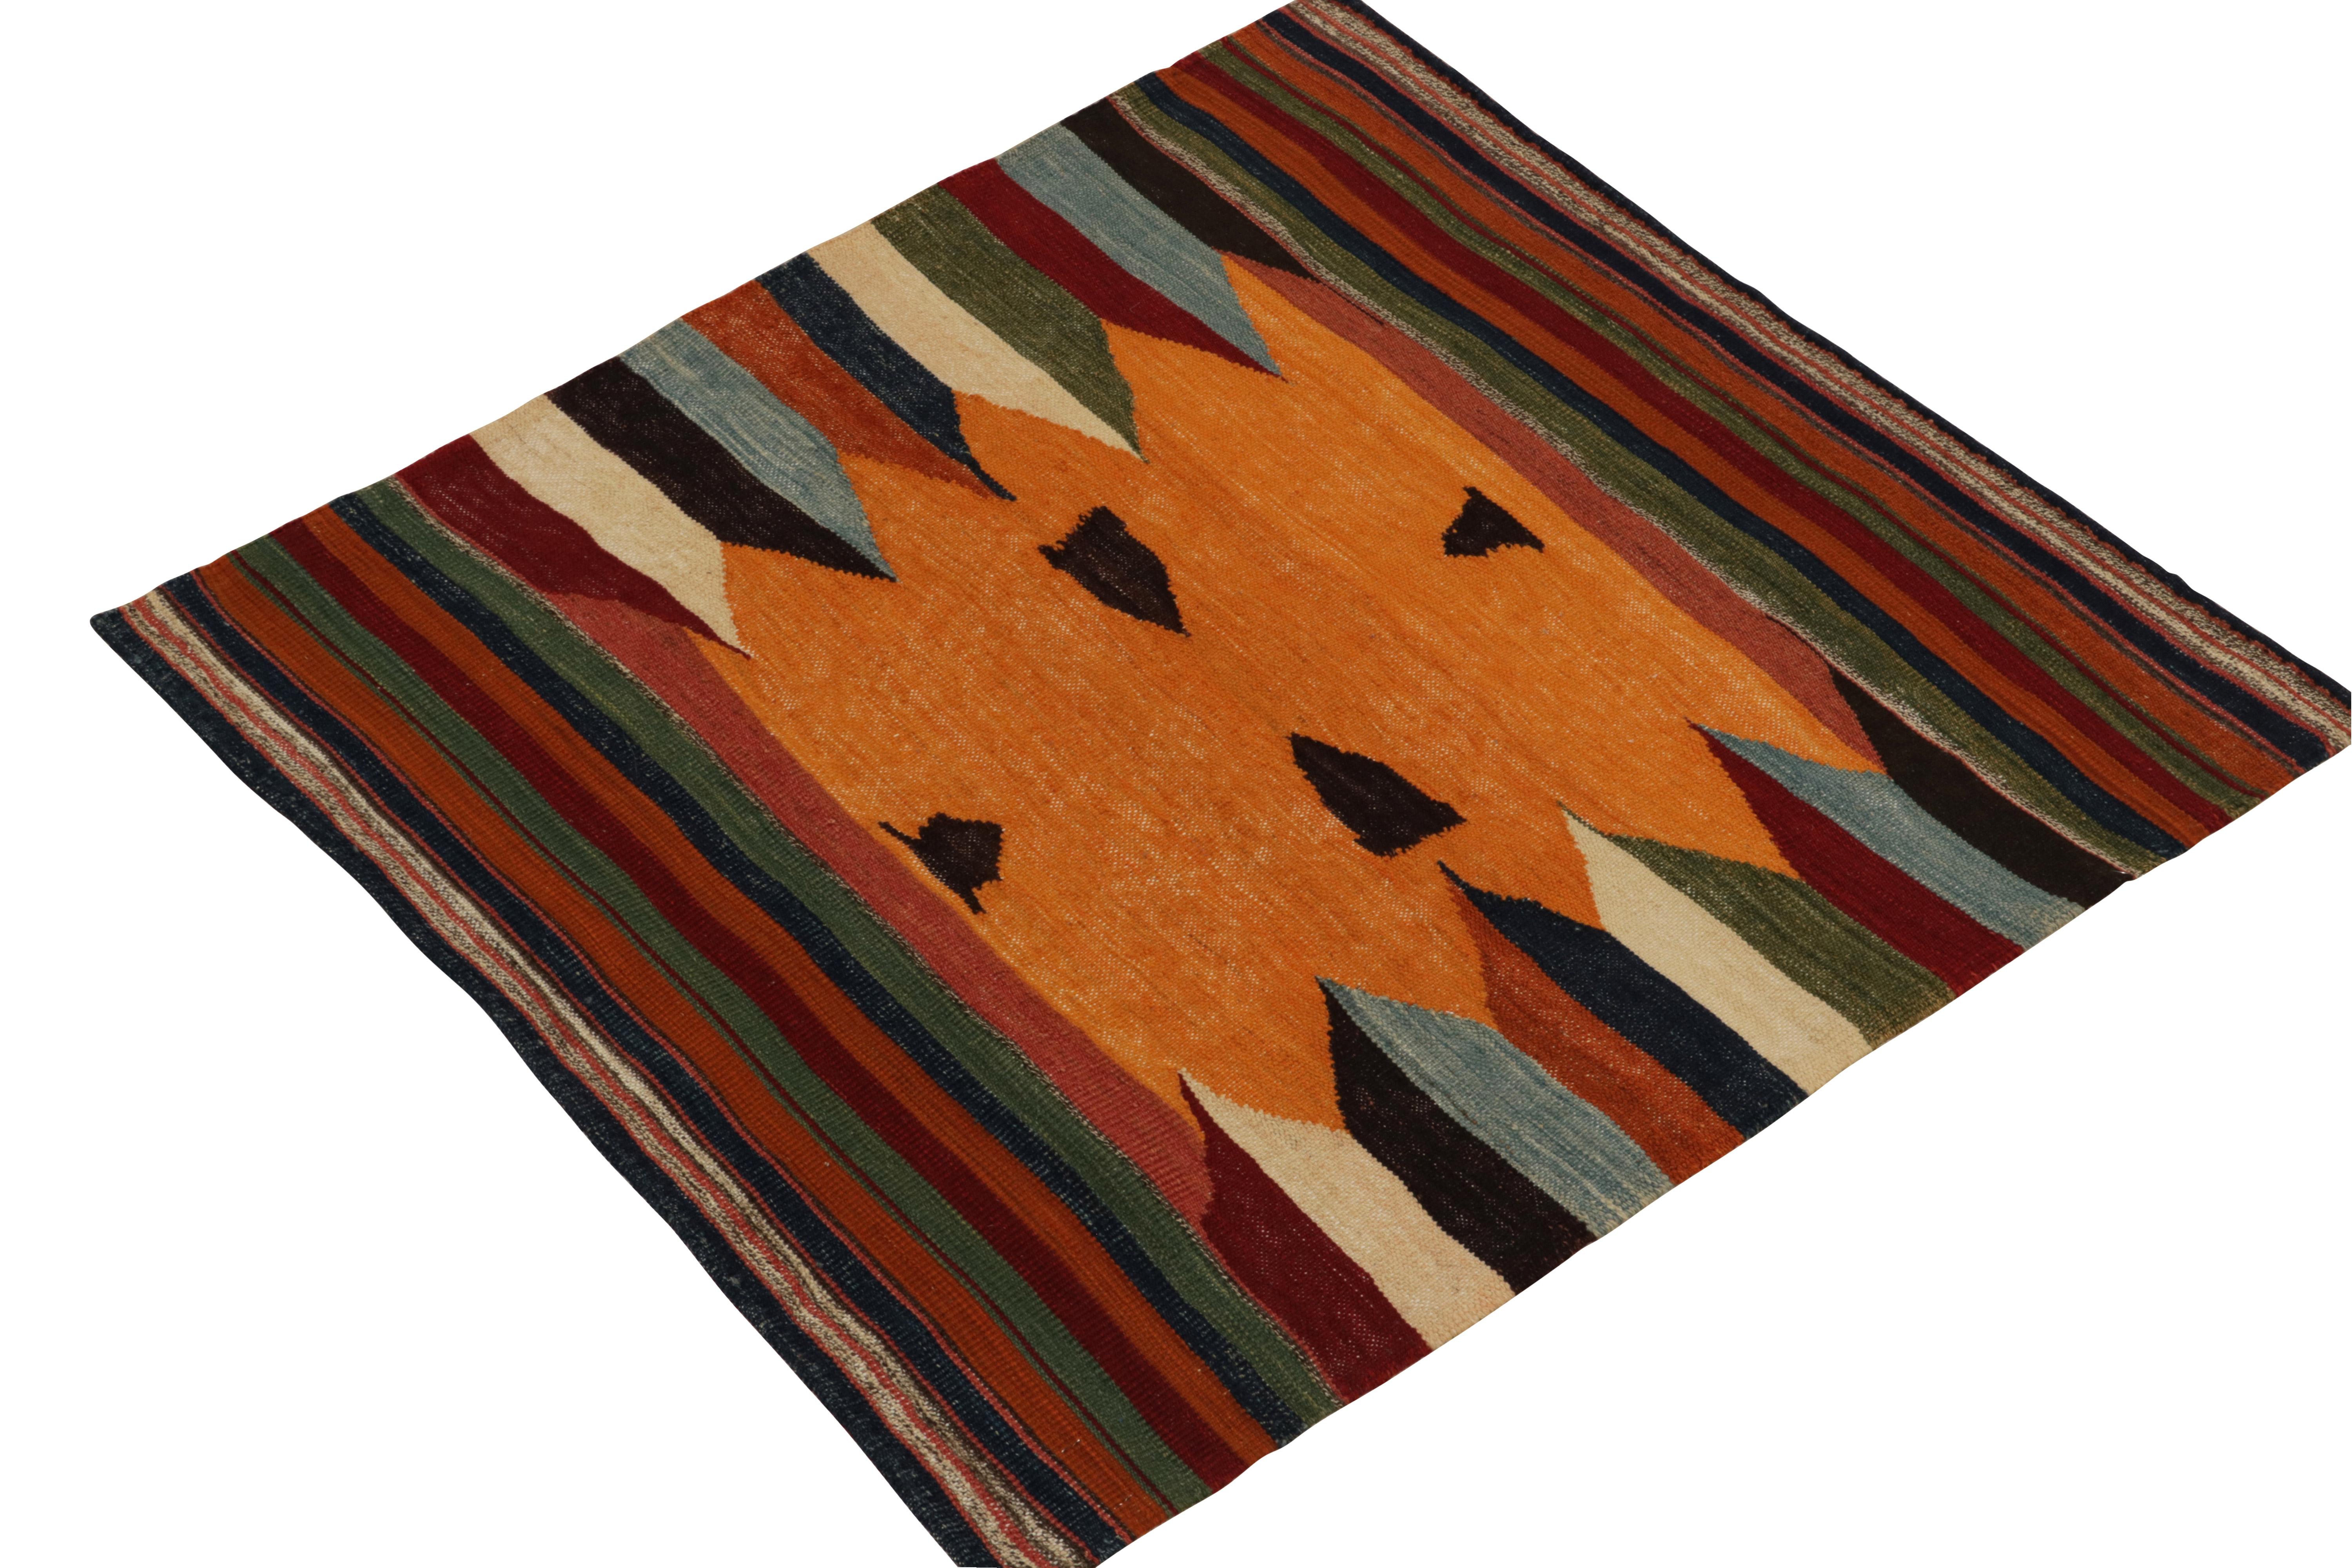 Persian 1980s Vintage Sofreh Kilim Rug in Orange Tribal Stripe Patterns by Rug & Kilim For Sale